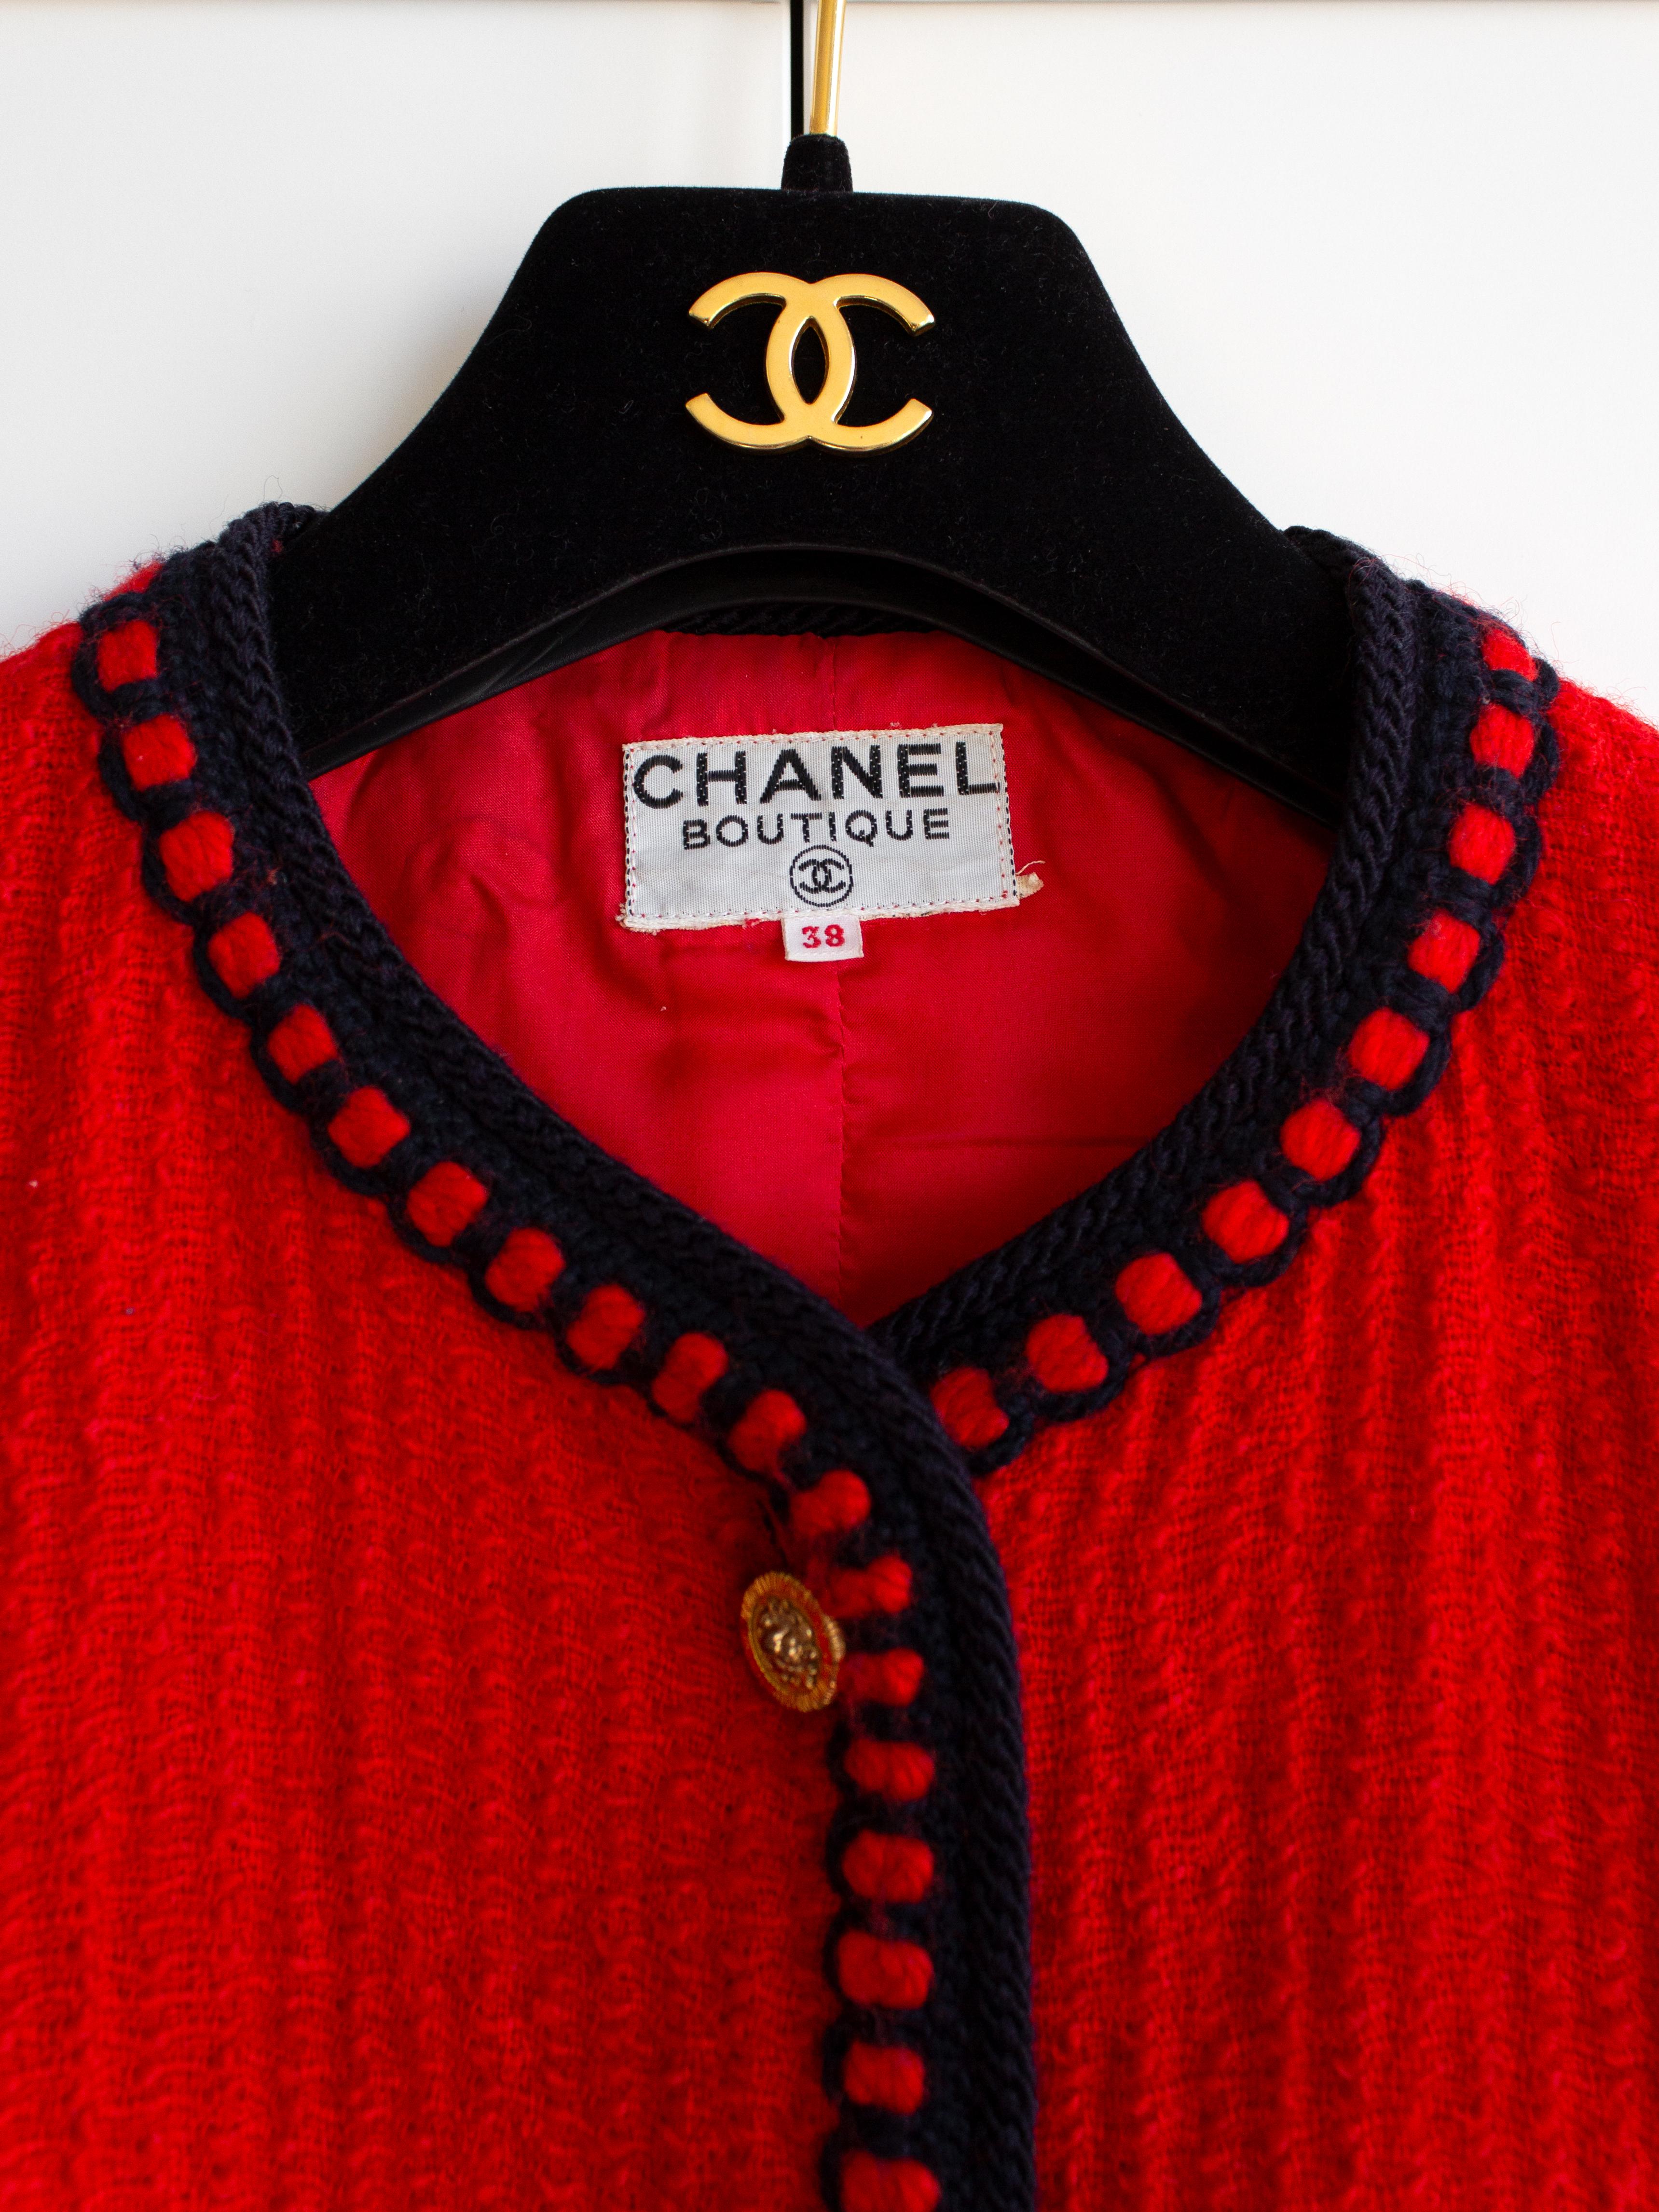 Chanel Vintage 1981 Parisian Red Gold Lion Tweed Jacket Skirt Suit For Sale 2